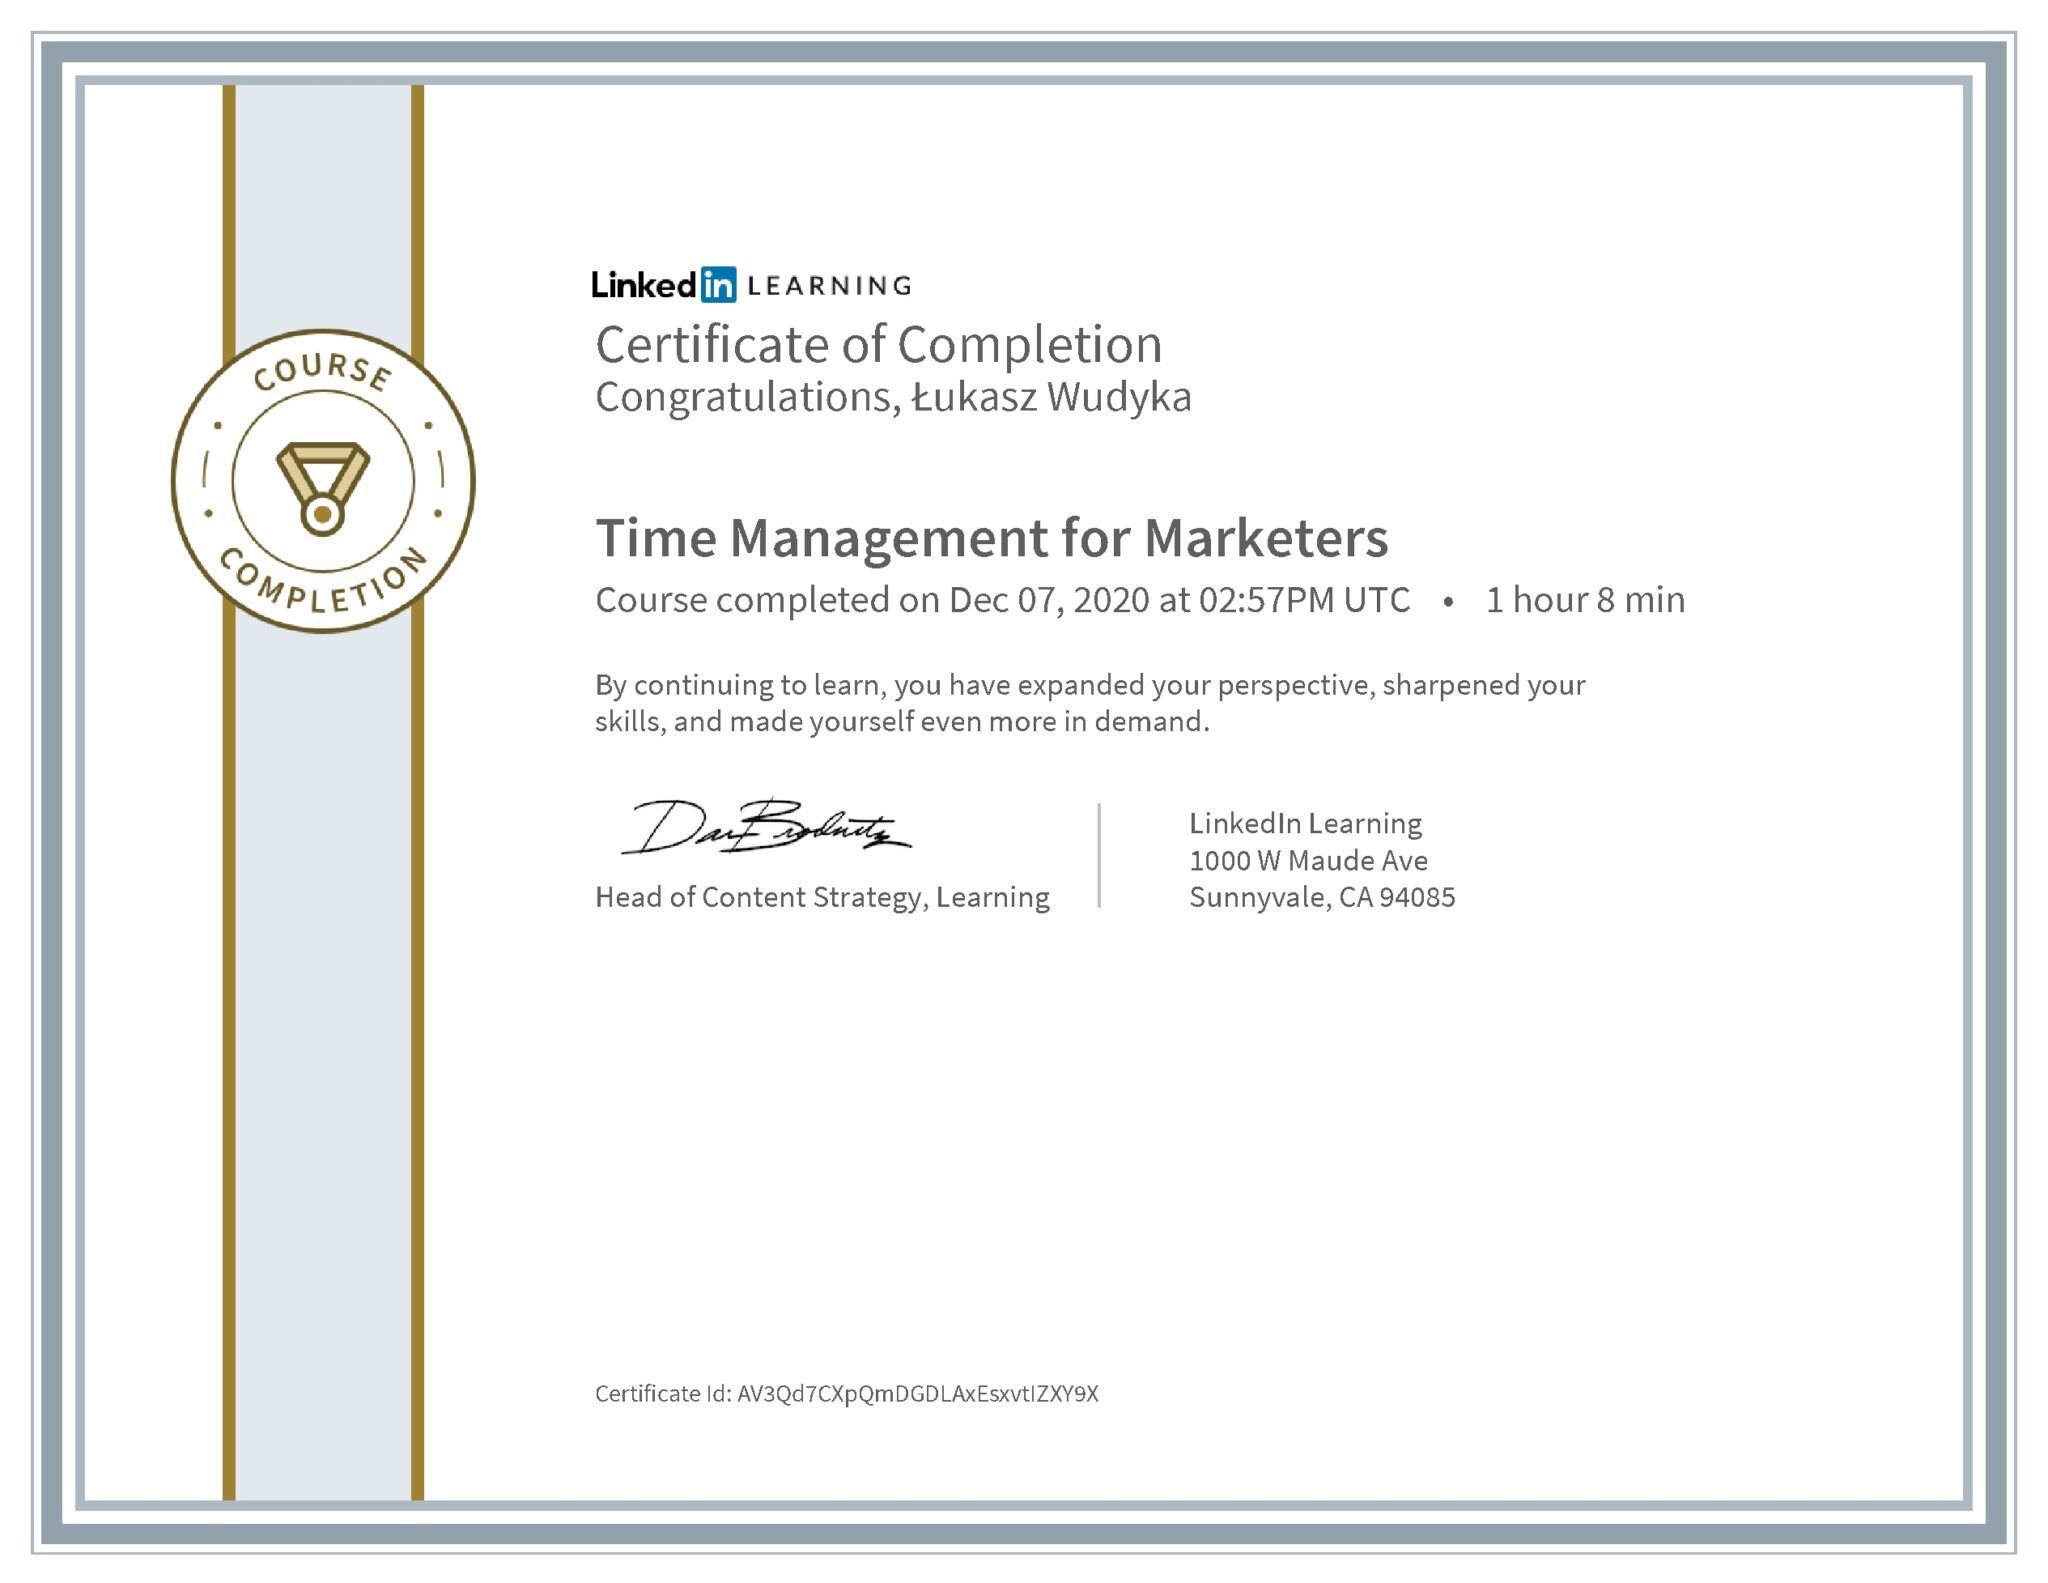 Łukasz Wudyka certyfikat LinkedIn Time Management for Marketers